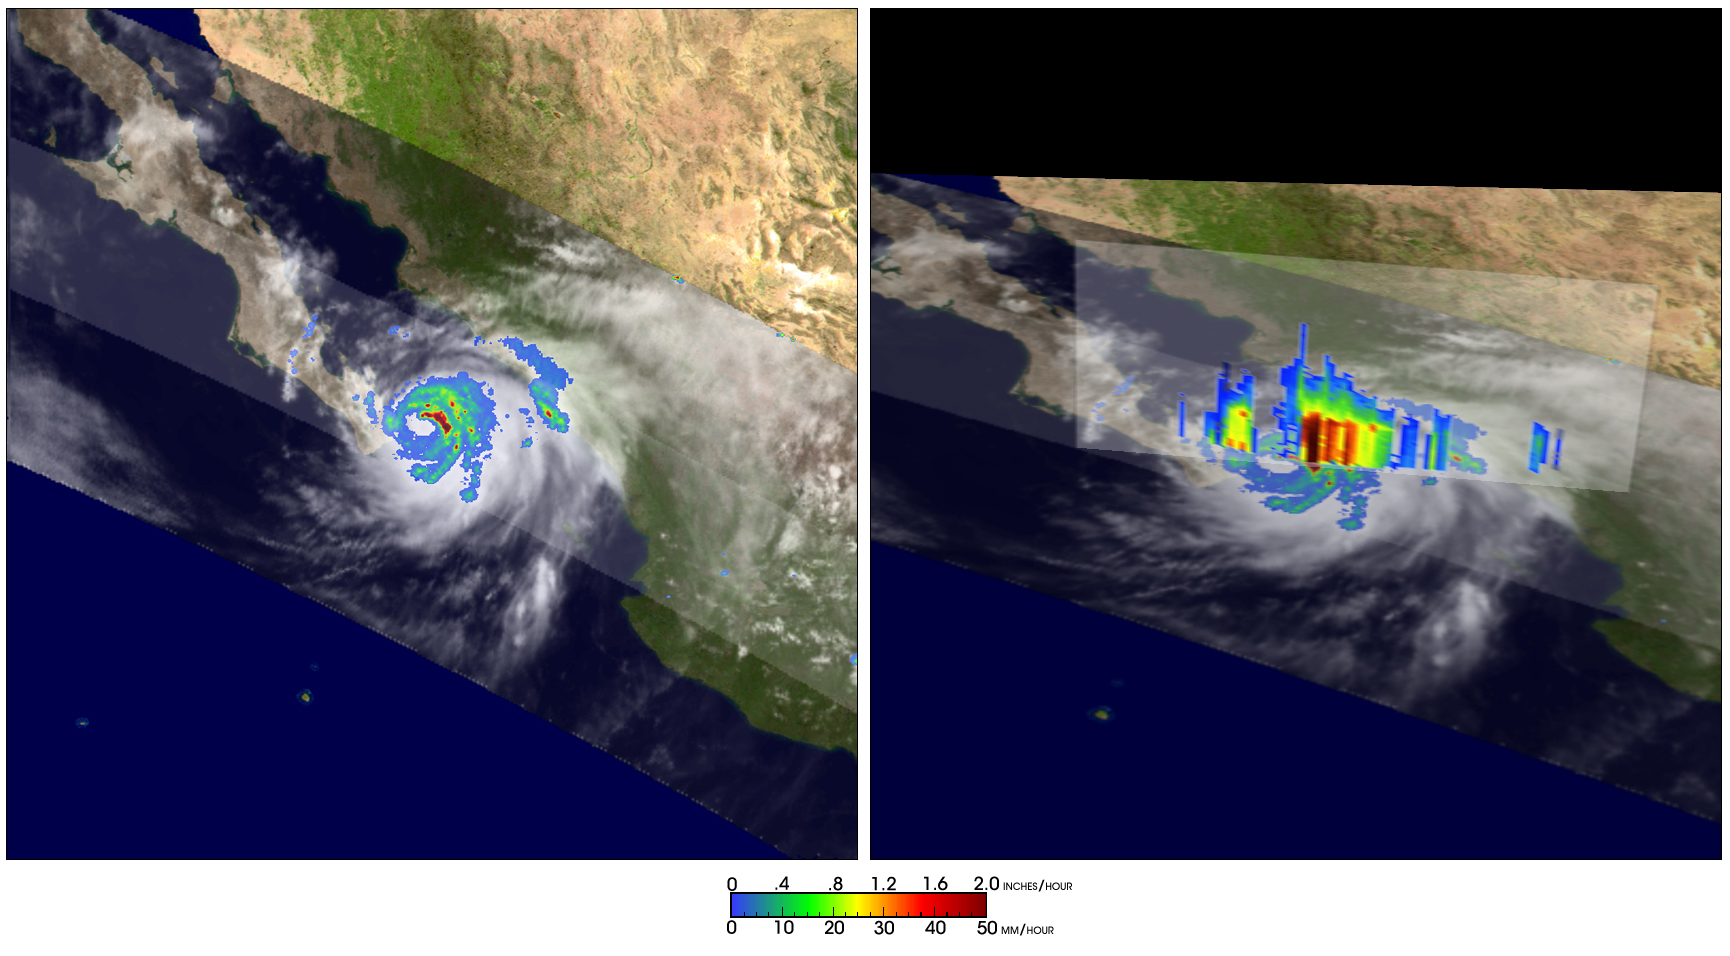 Hurricane Ignacio - related image preview